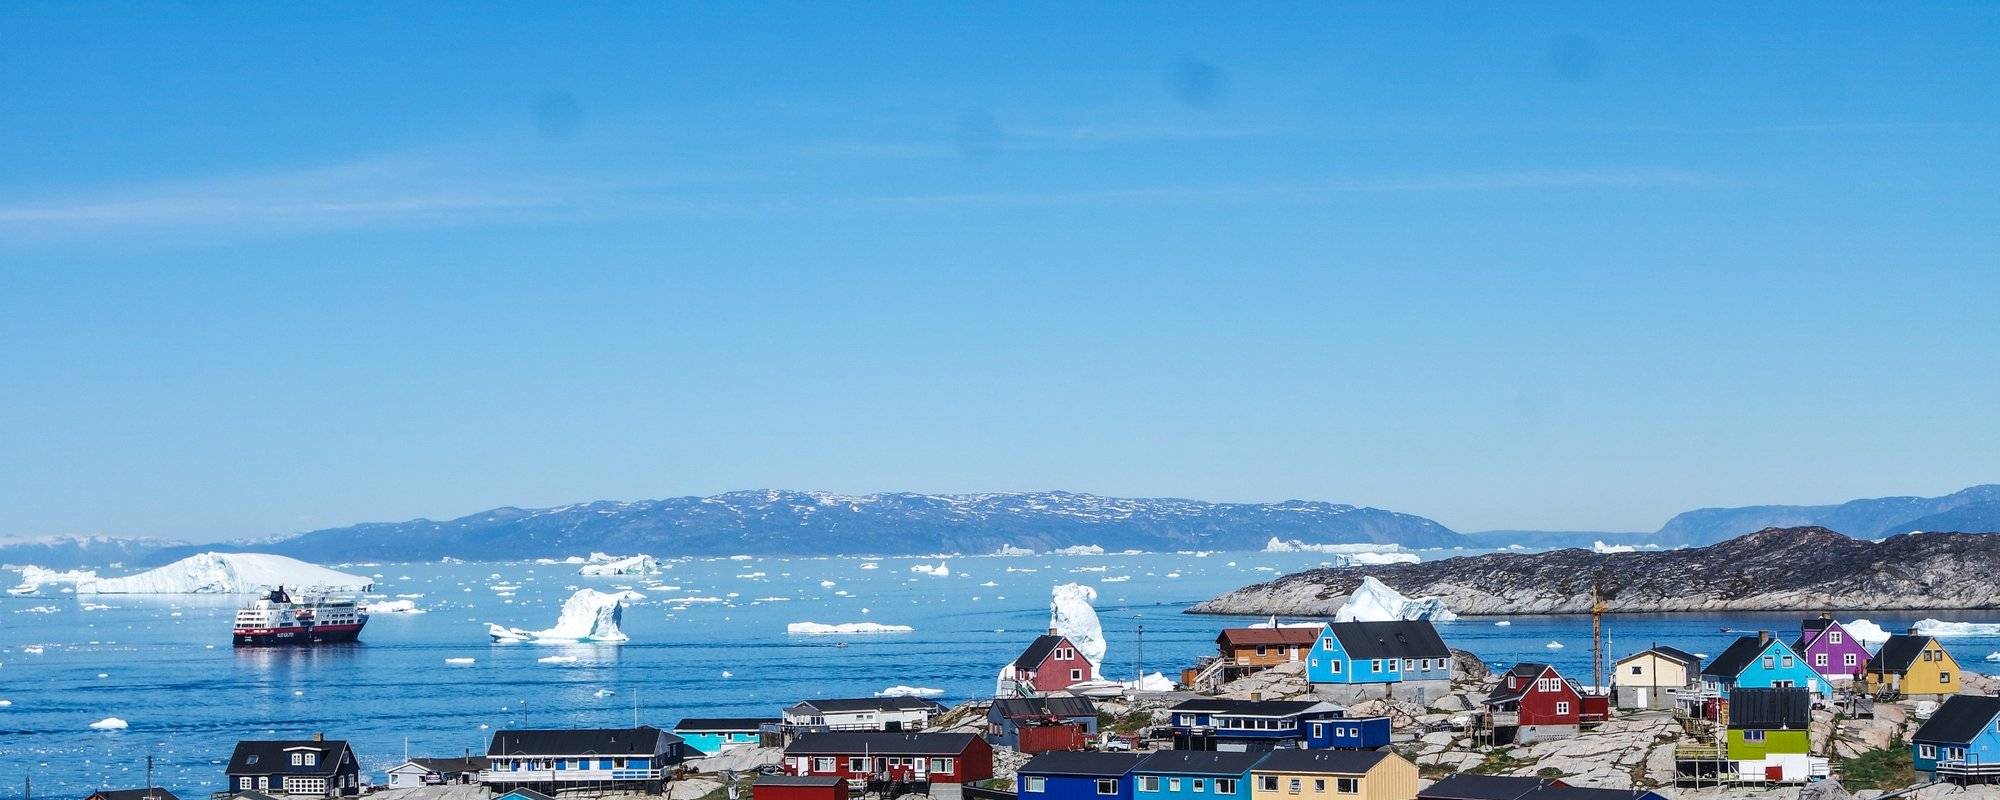 [Greenland Ilulissat #10] Informations about Ilulissat